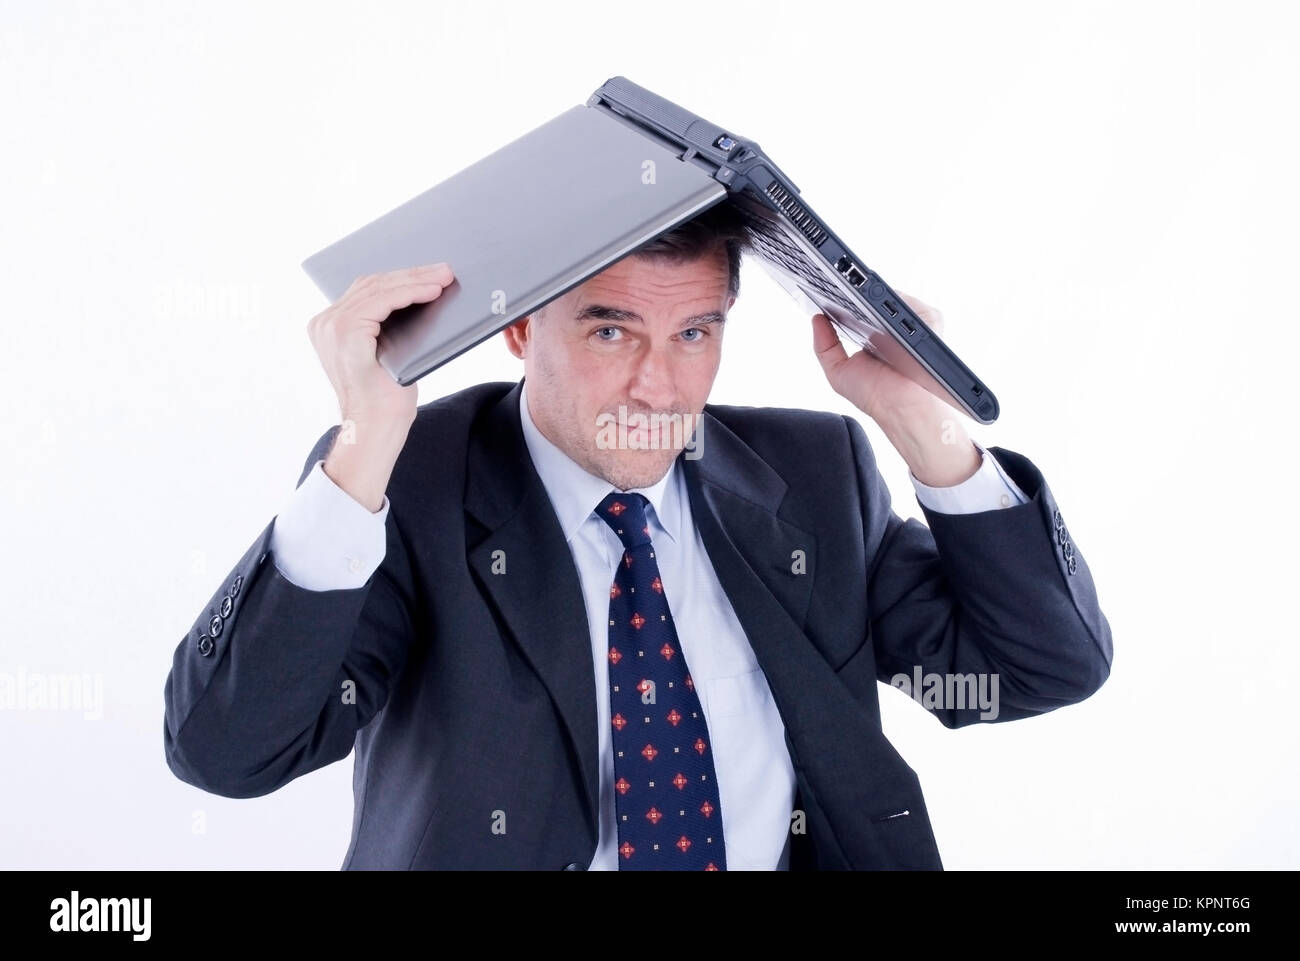 Model release , Geschaeftsmann, 50+, mit Laptop ueber dem Kopf - business man with laptop Stock Photo